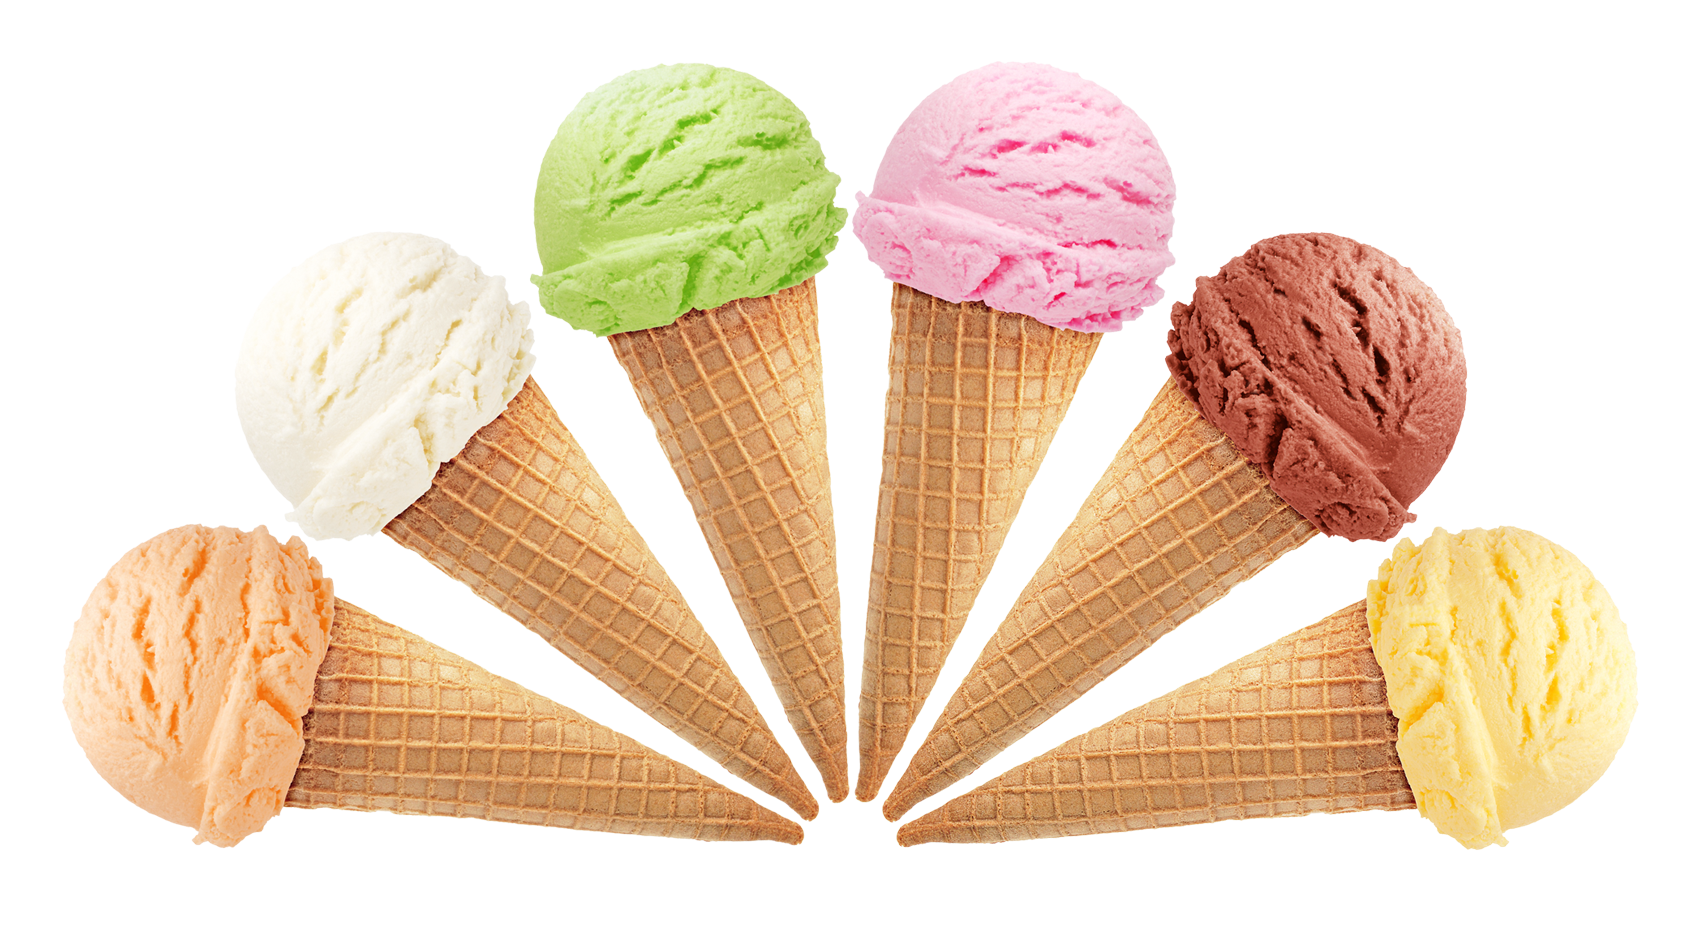 Ice Cream Cone PNG Image